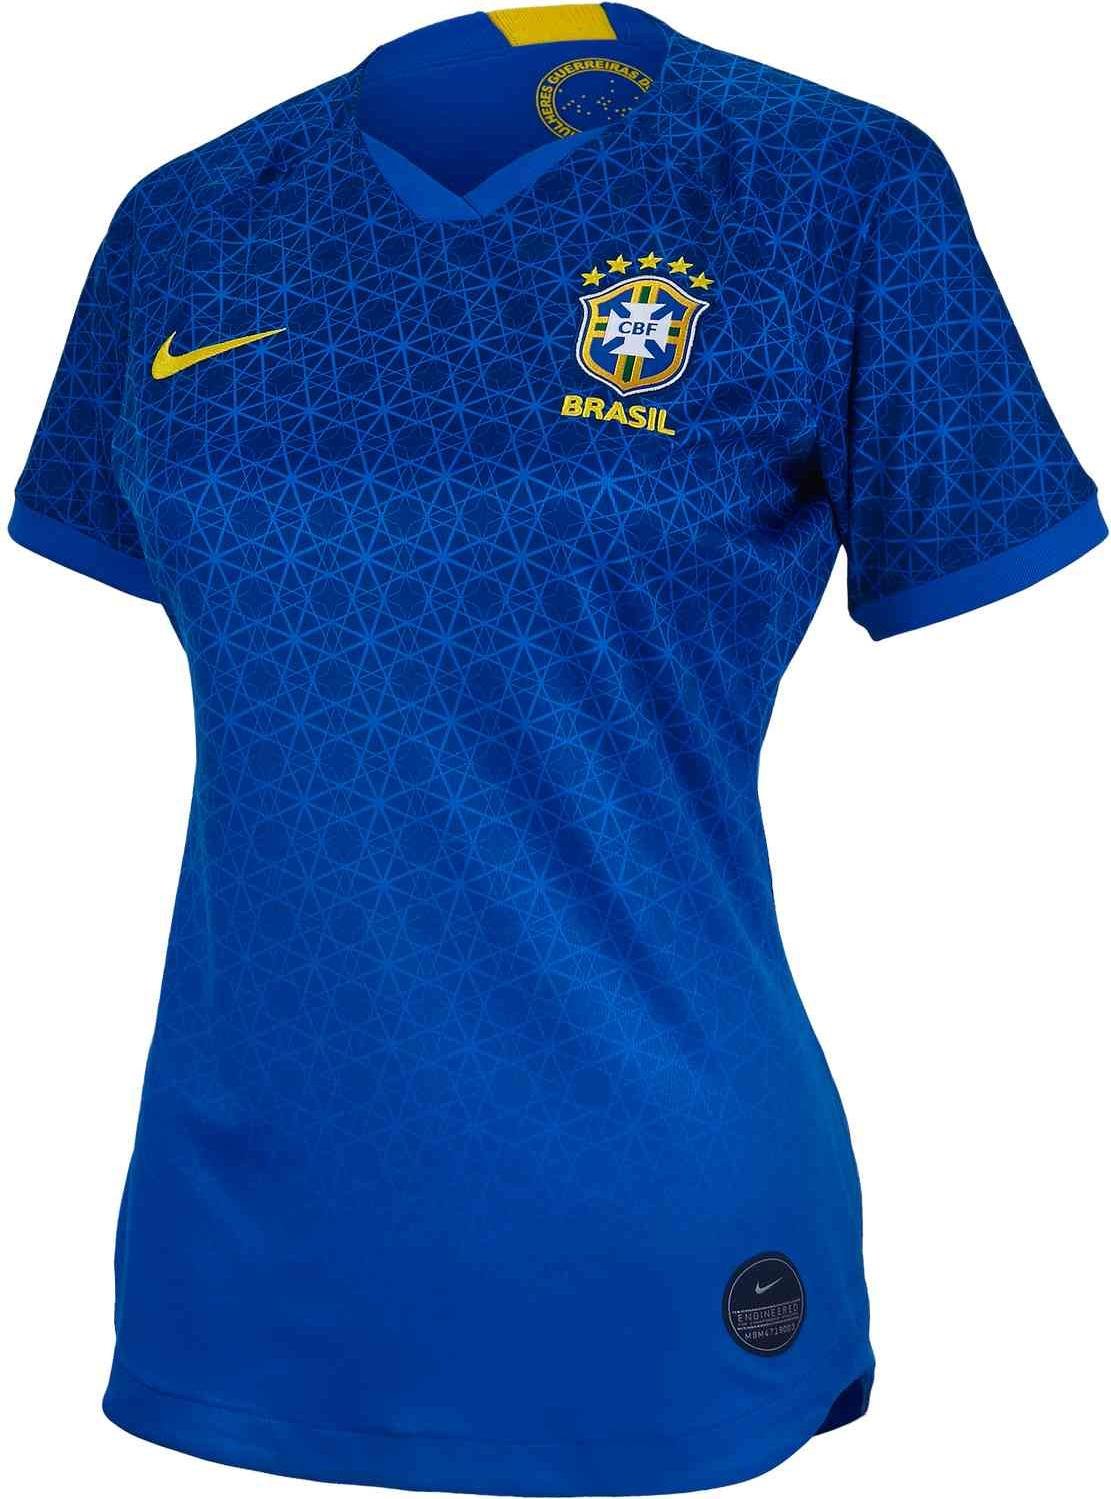 Jersey Nike Brazil away 2019 W